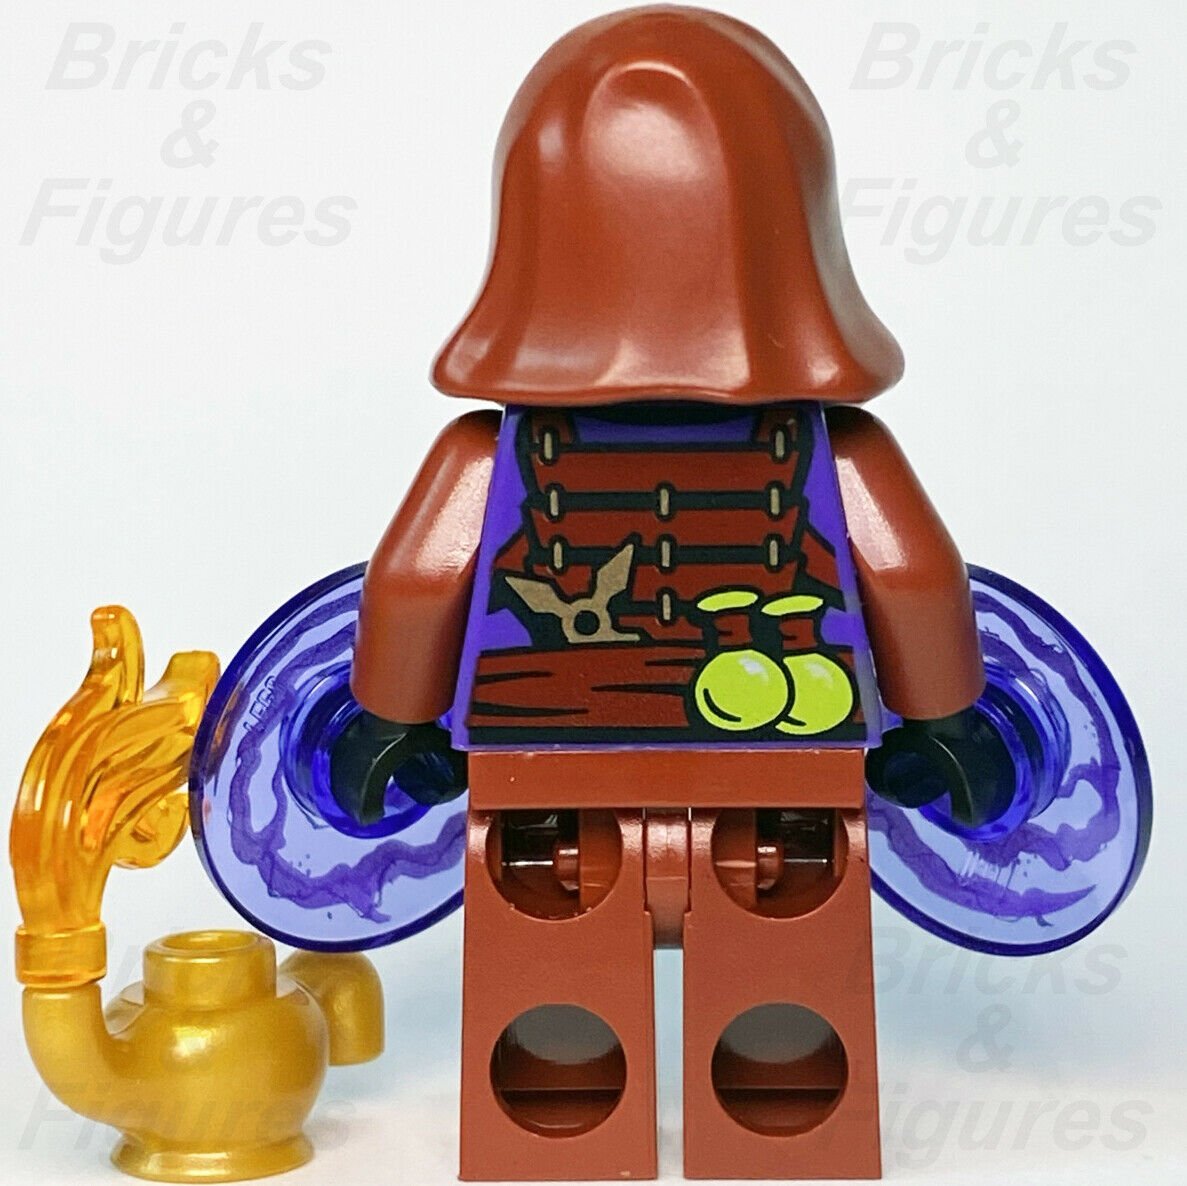 New Ninjago LEGO Clouse with Lamp Skybound Dark Magic Master Minifigure 891610 - Bricks & Figures